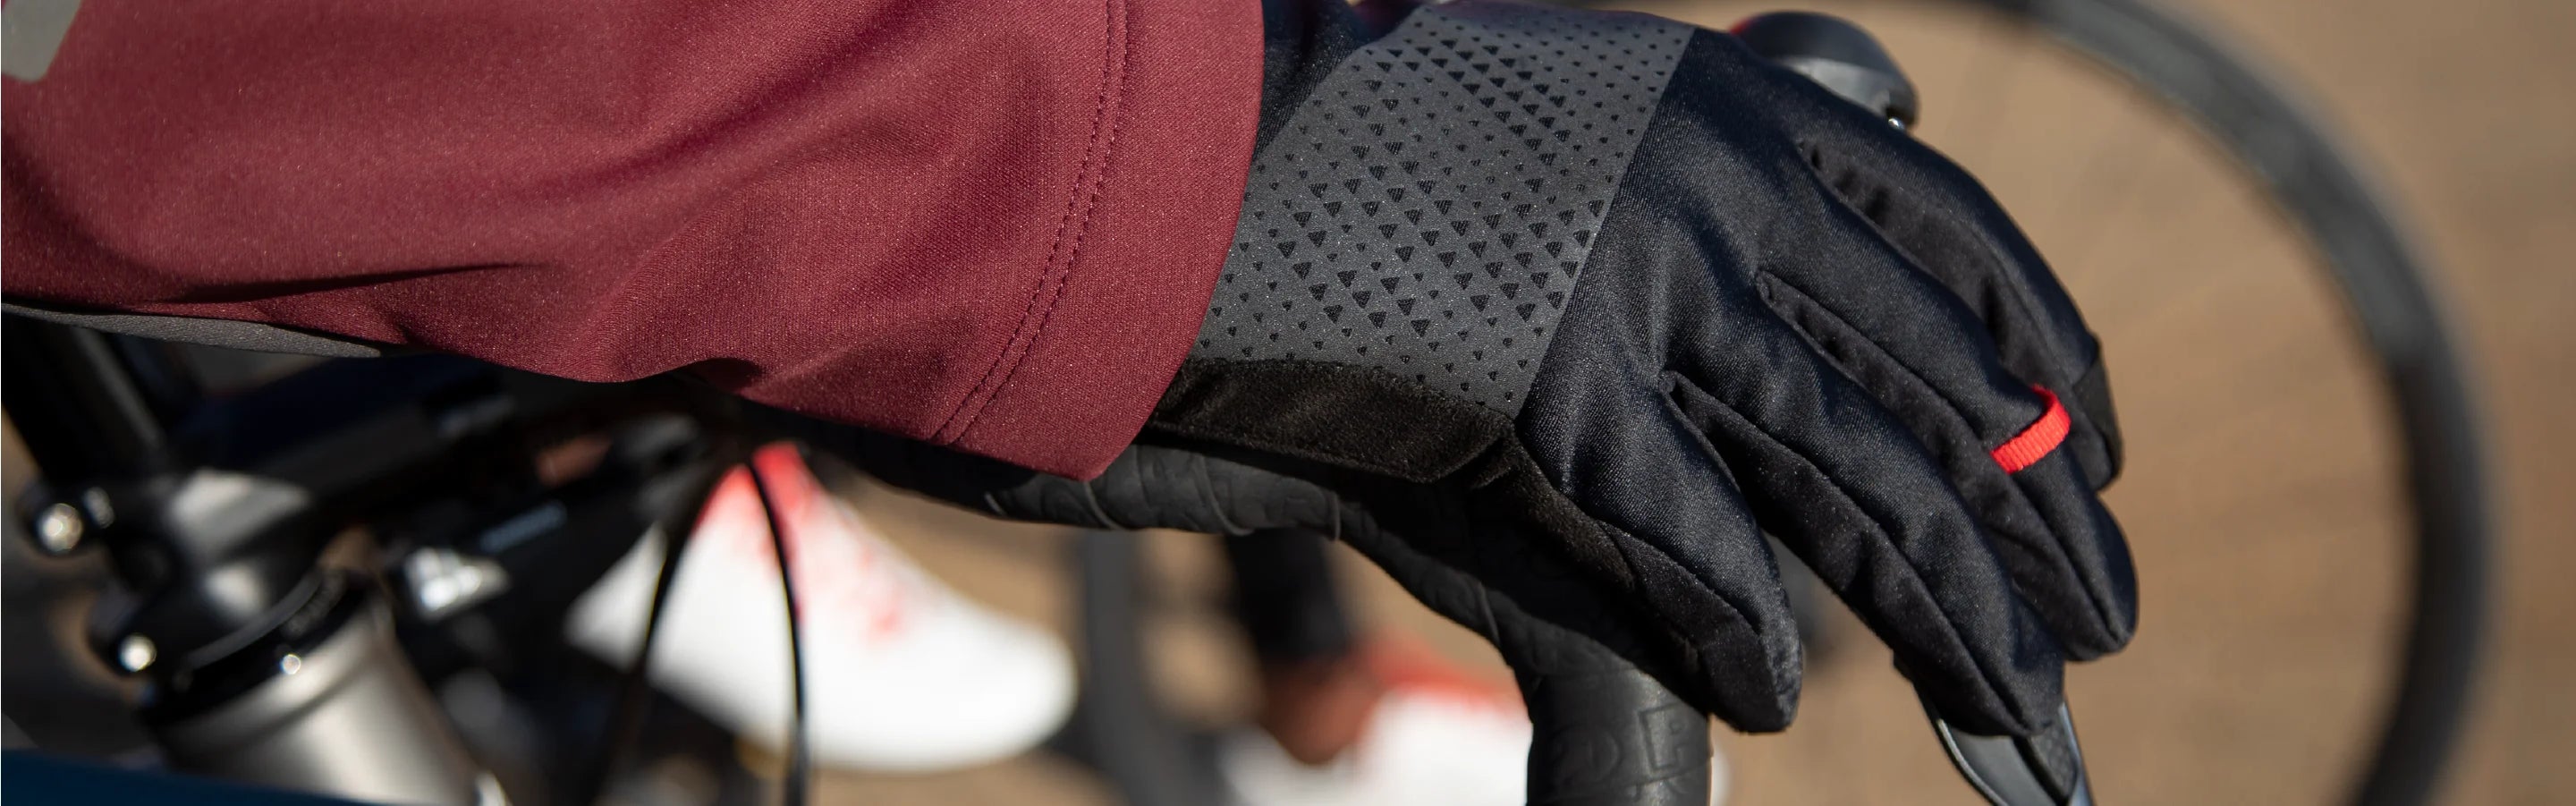 close-up image of Pearl iZUMi Winter Cycling Glove